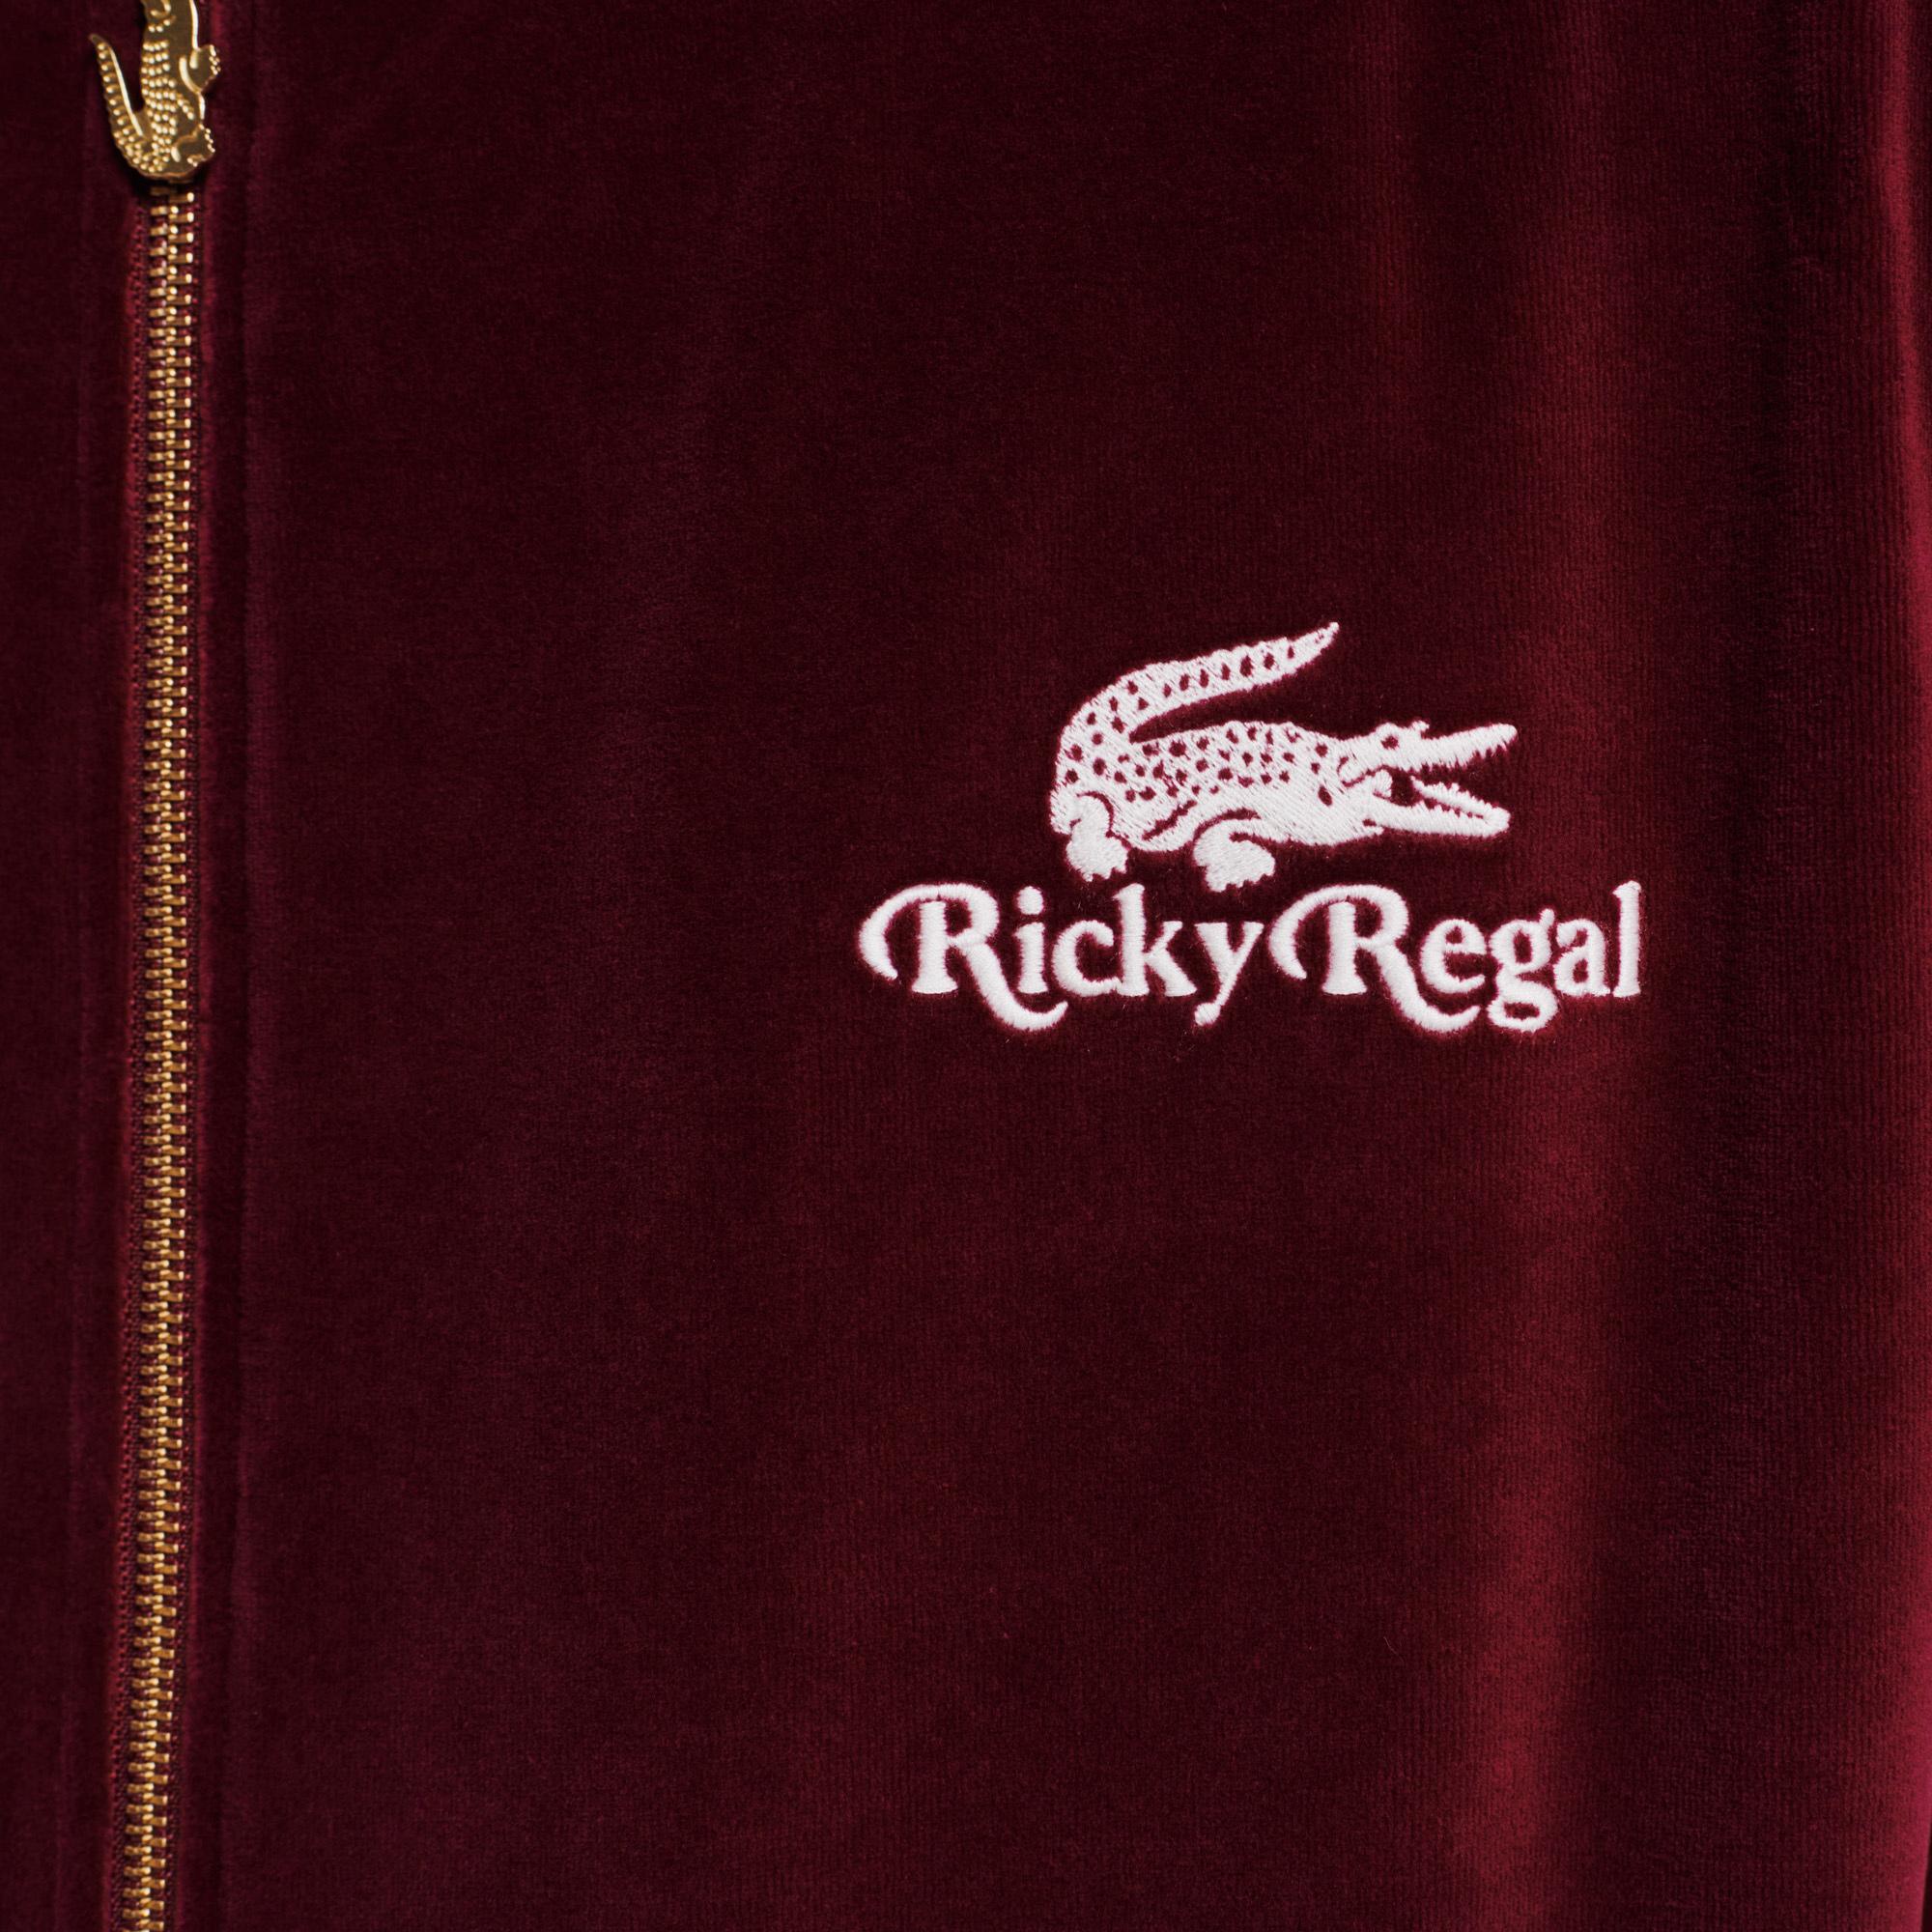 Lacoste x Ricky Regal Erkek Kadife Bordo Sweatshirt. 7